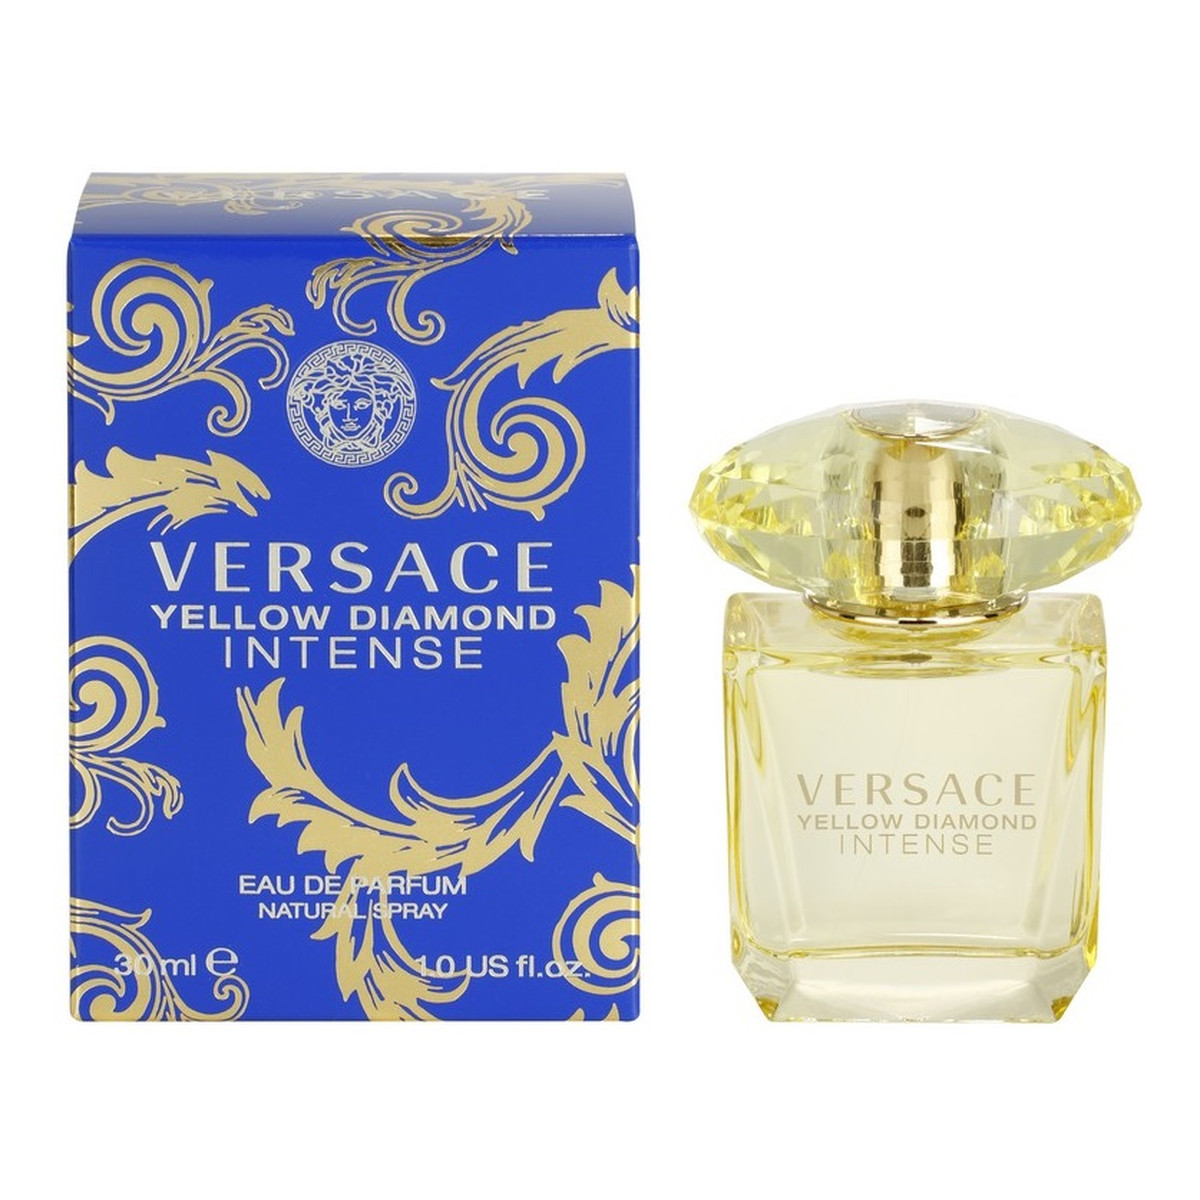 Versace Yellow Diamond Intense woda perfumowana dla kobiet 30ml